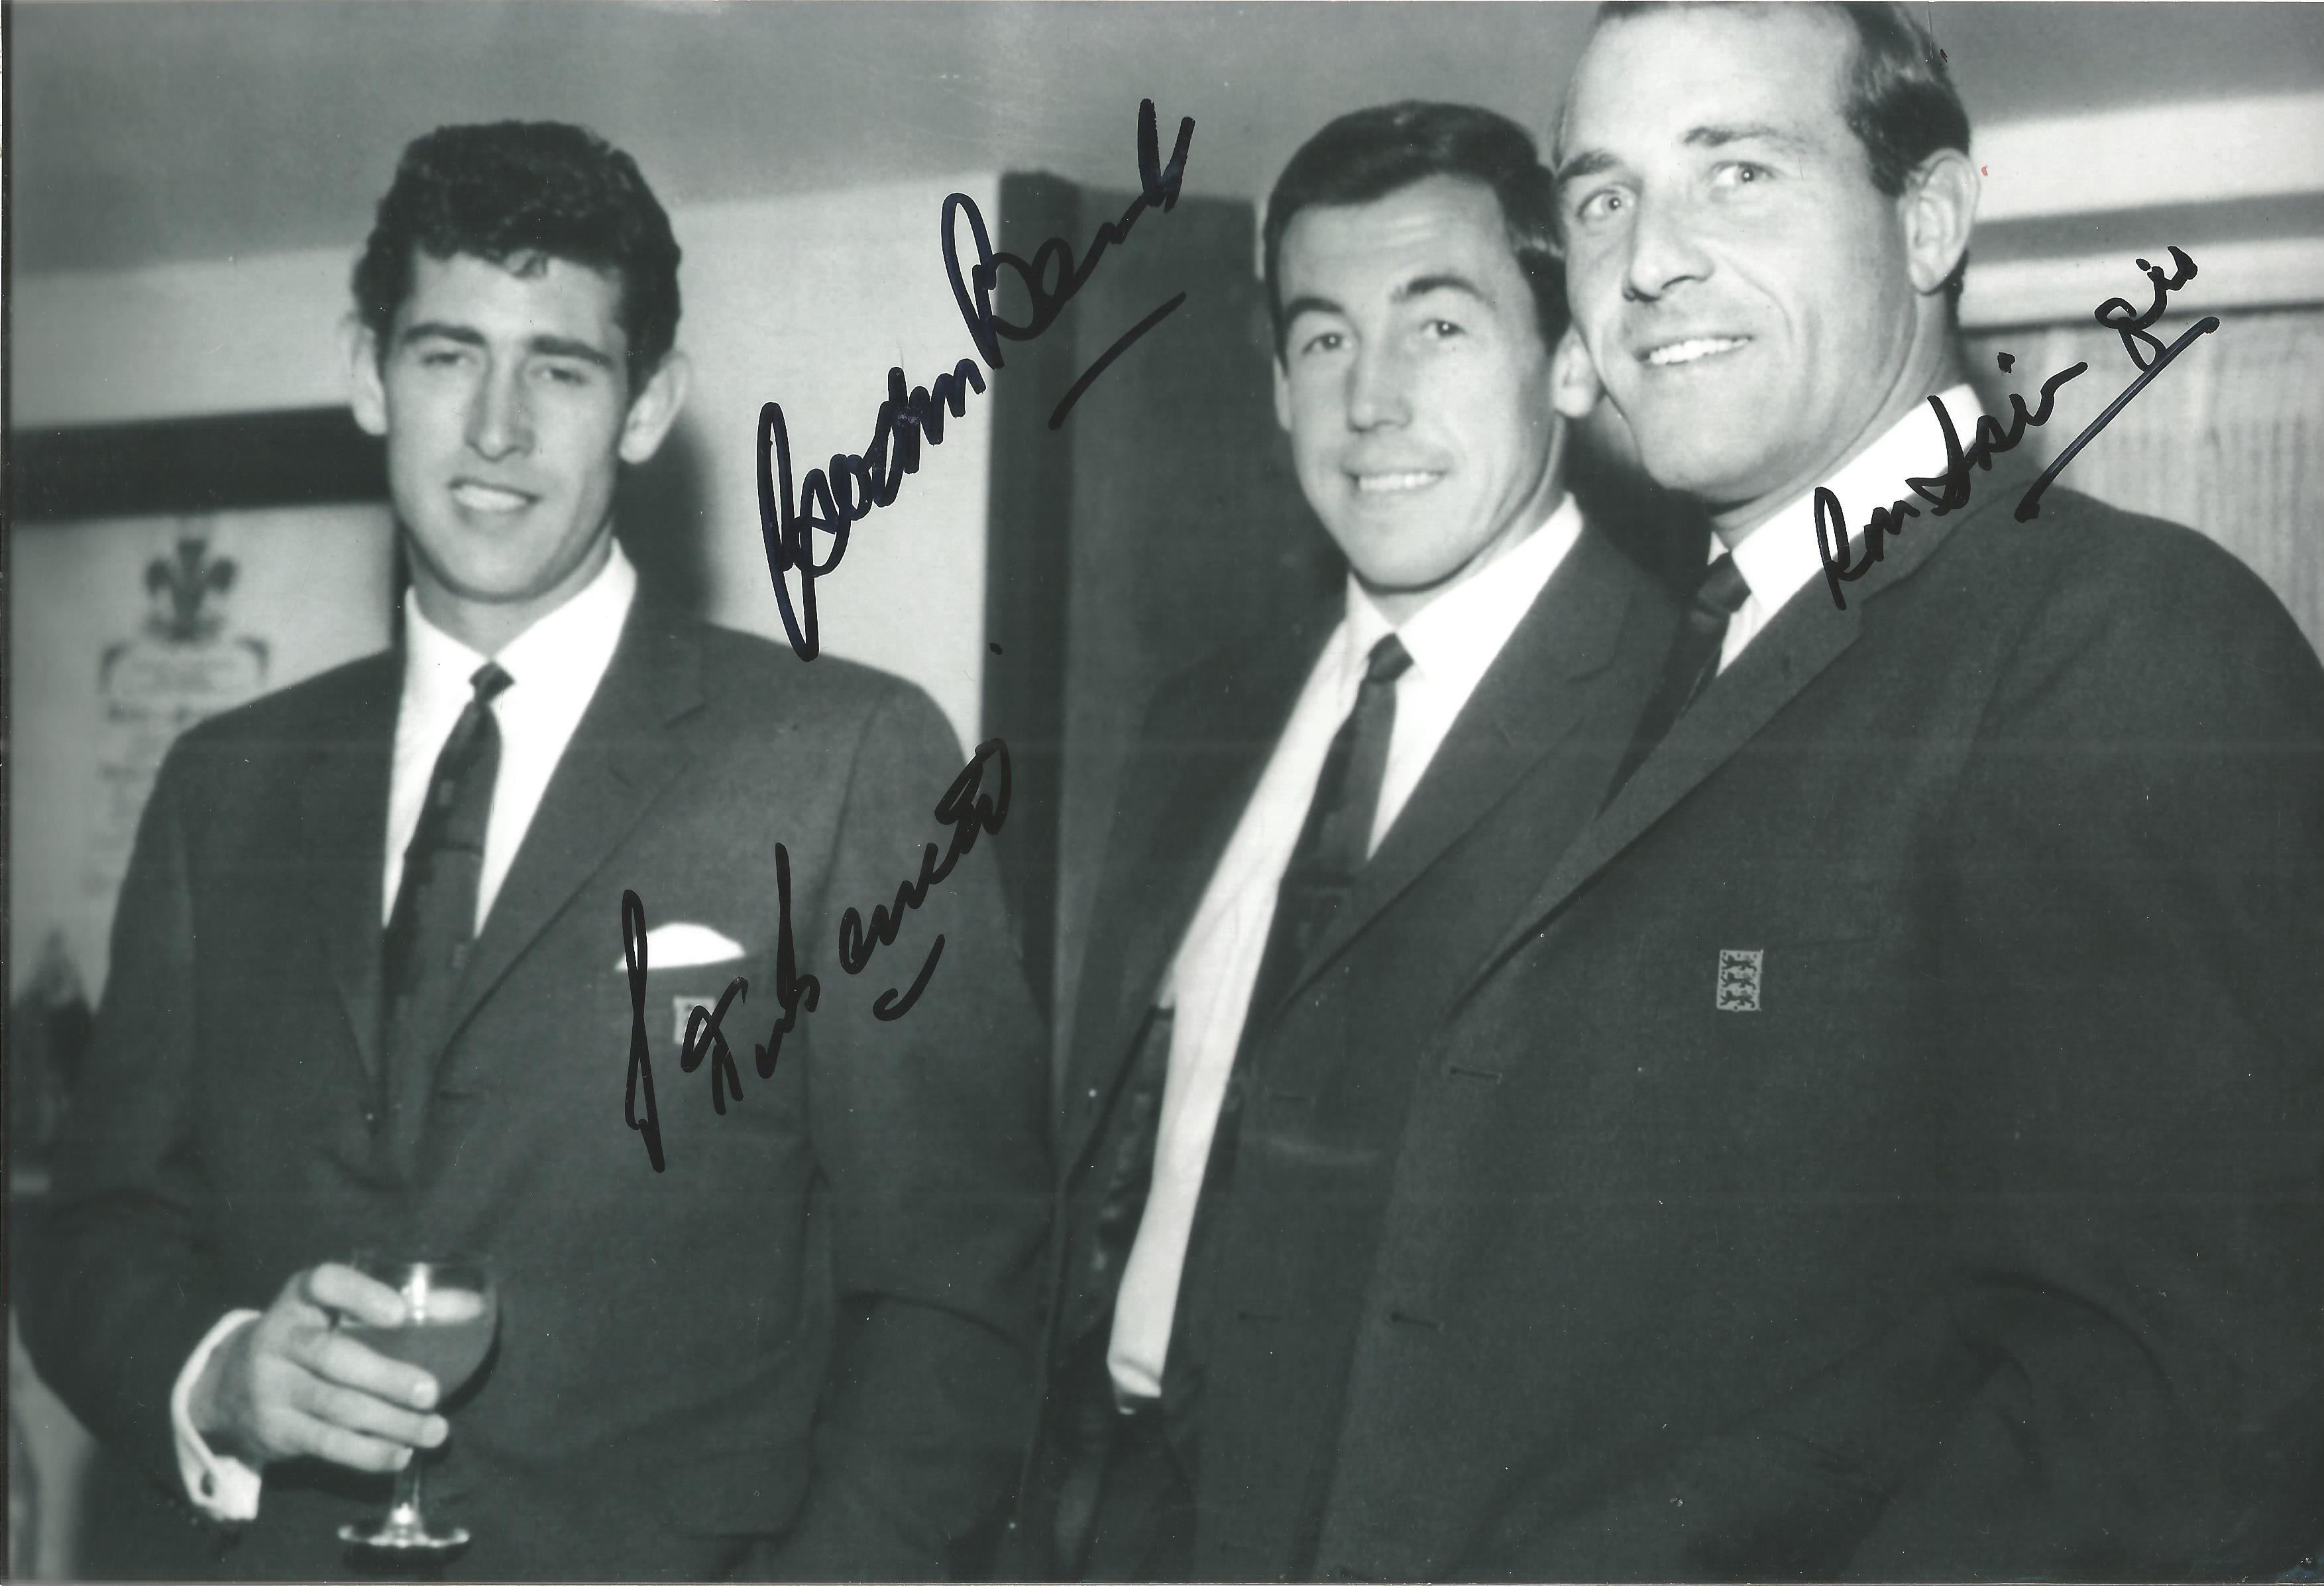 Football, Gordon Banks, Ronald Springett, Pete Bonetti signed 12x6 black and white photograph.